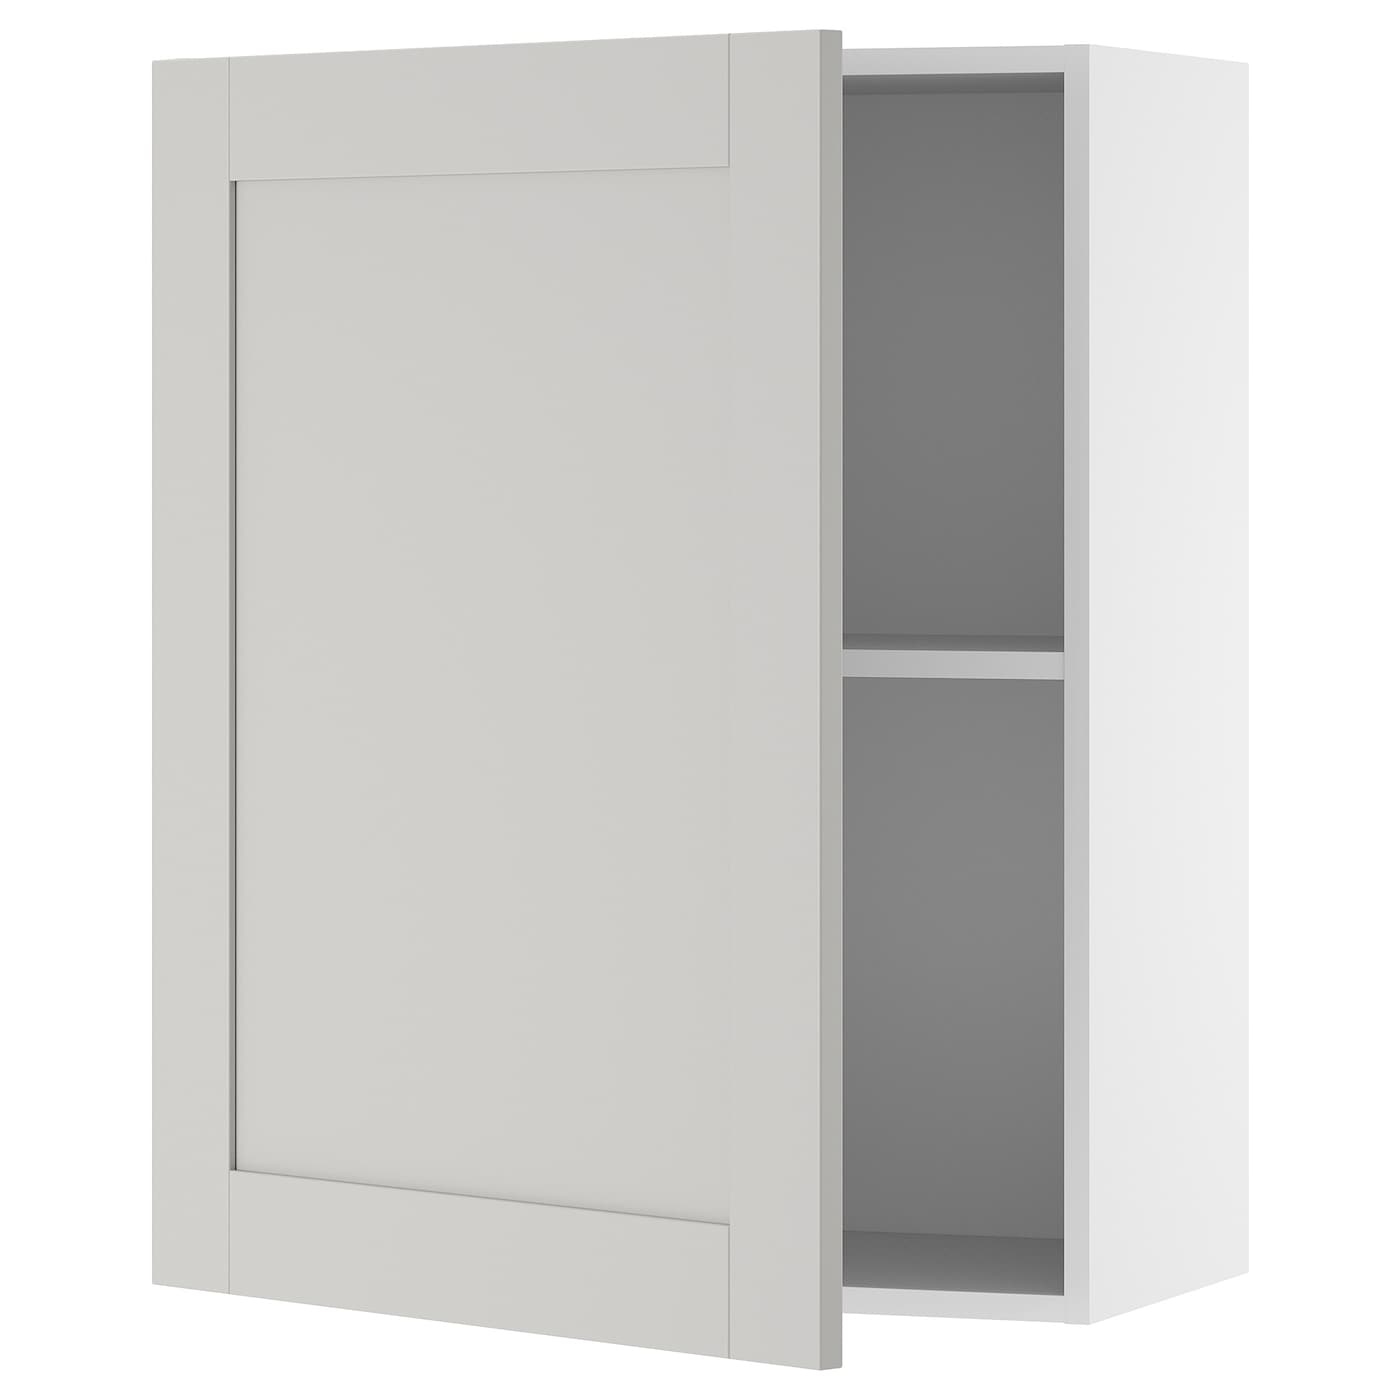 Навесной шкаф с дверцами - IKEA KNOXHULT/КНОКХУЛЬТ ИКЕА, 75х31х60 см, белый/серый